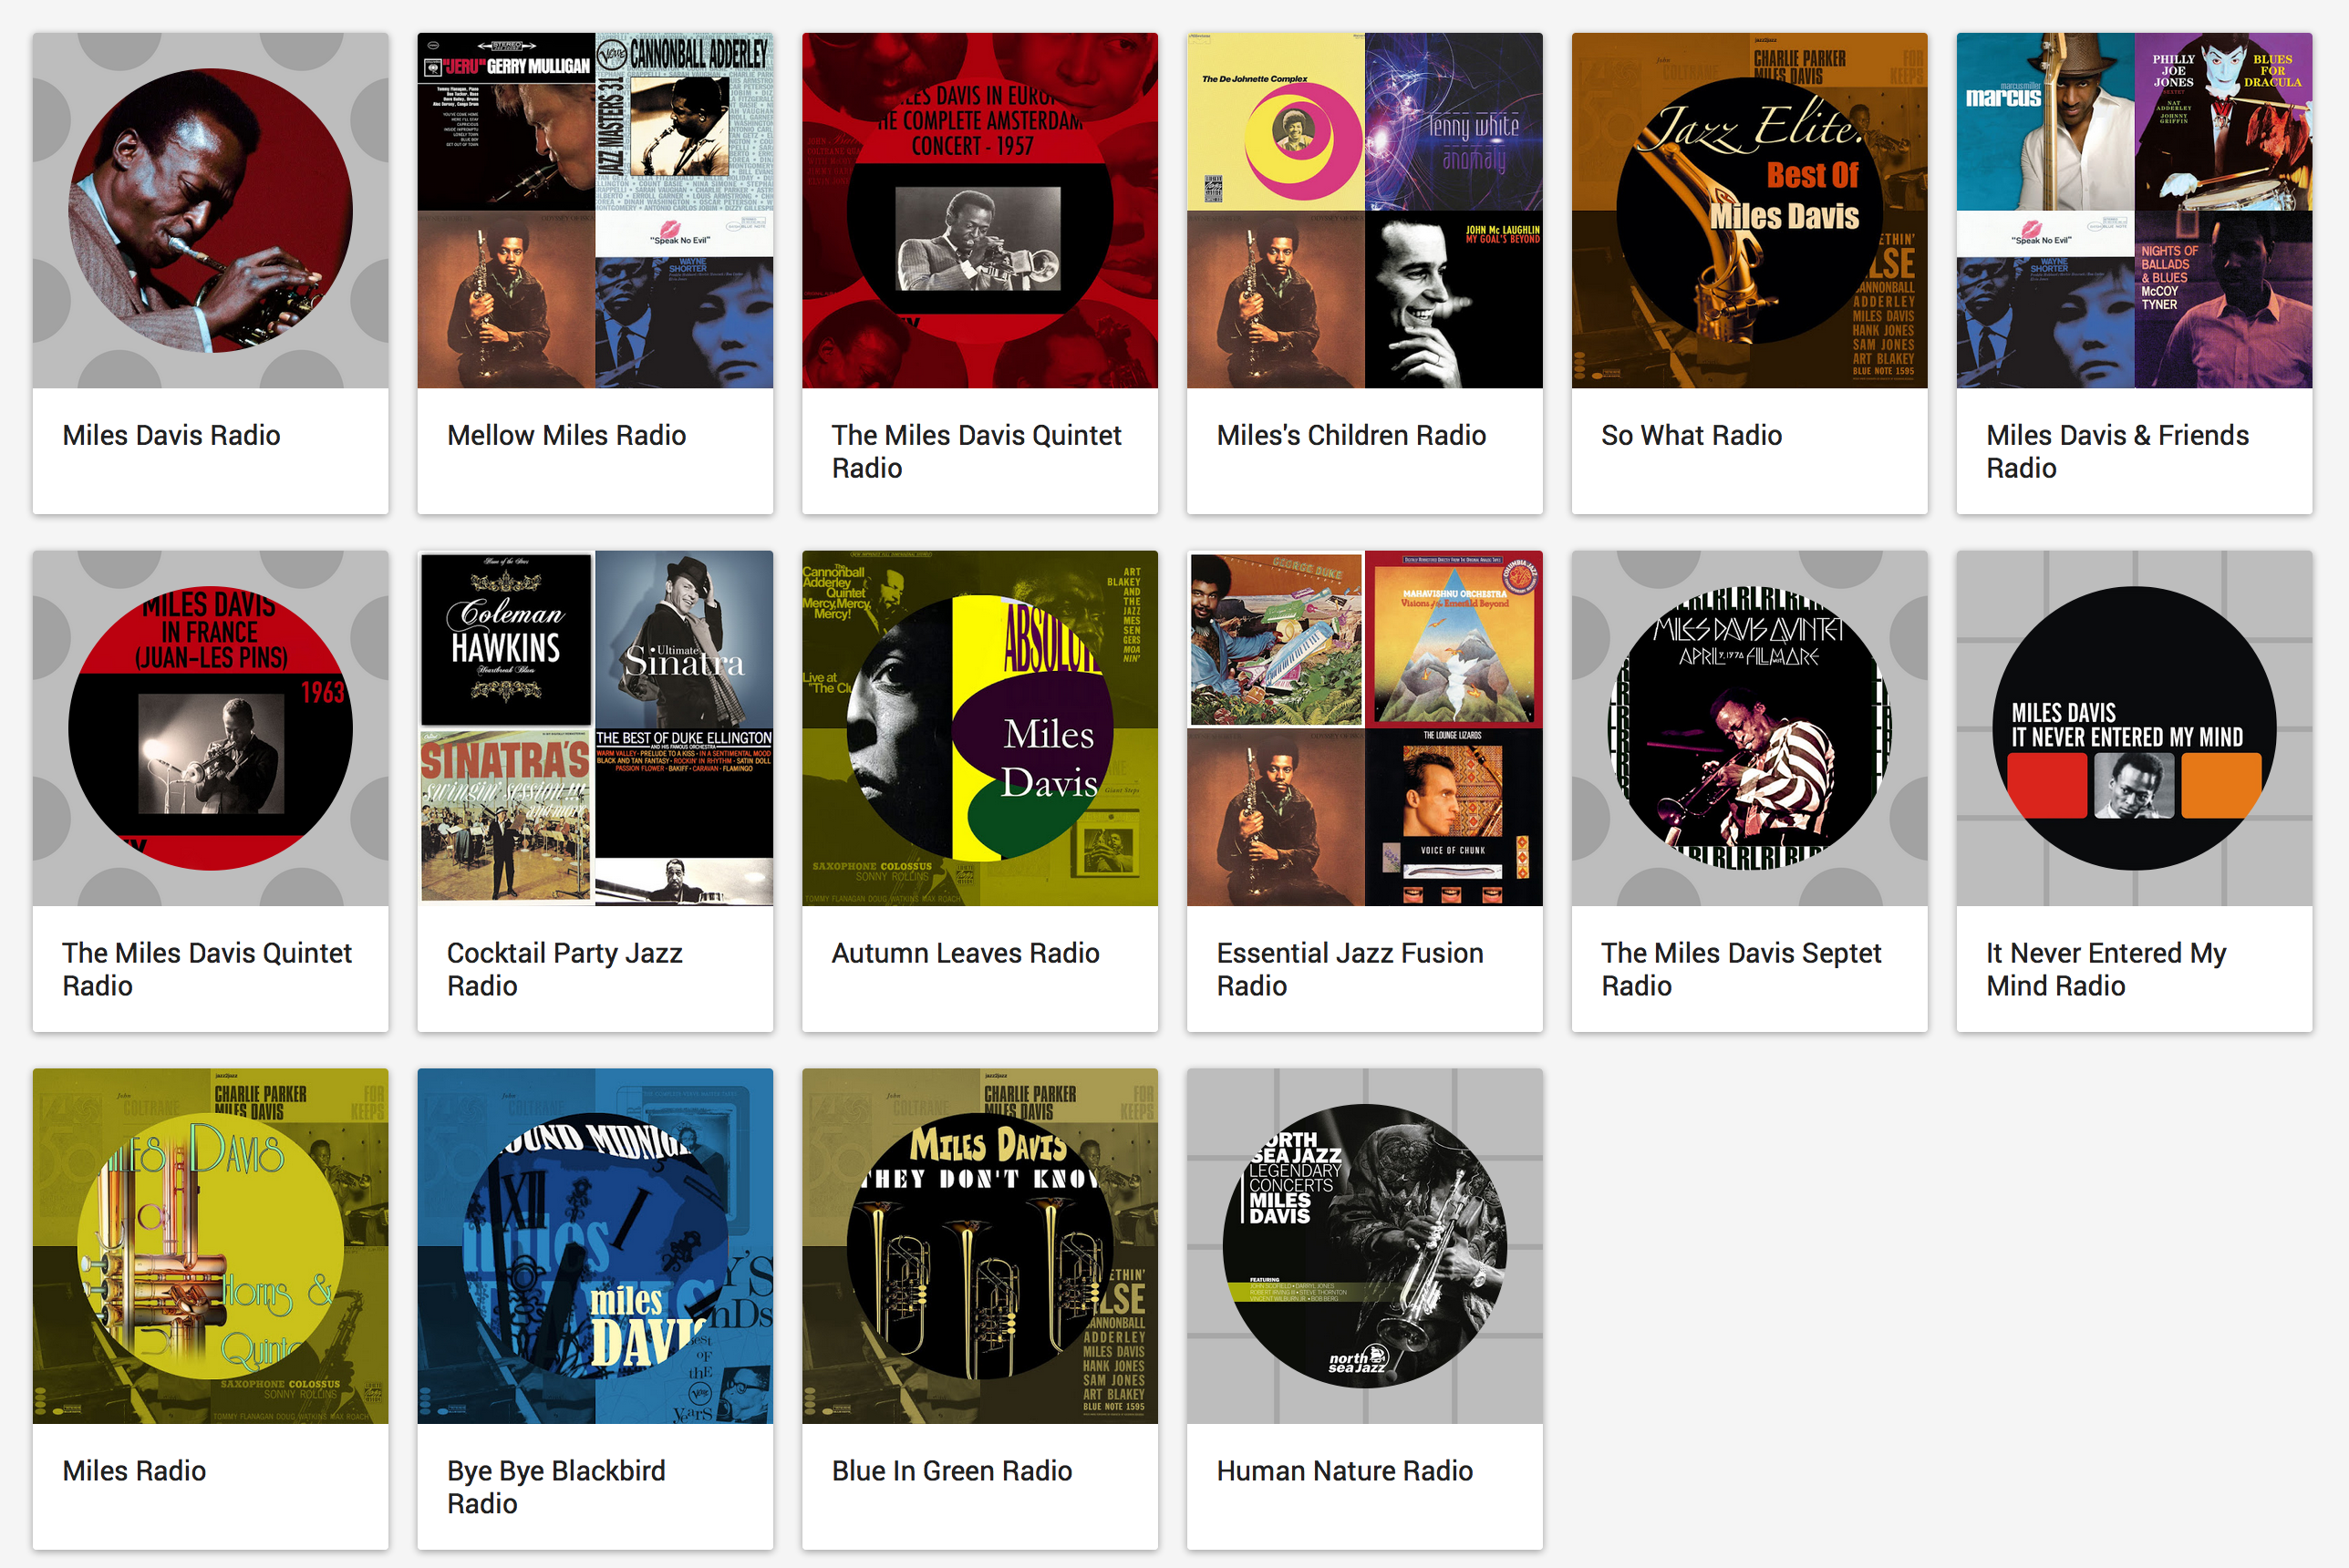 Miles Davis related radio stations on Google Music